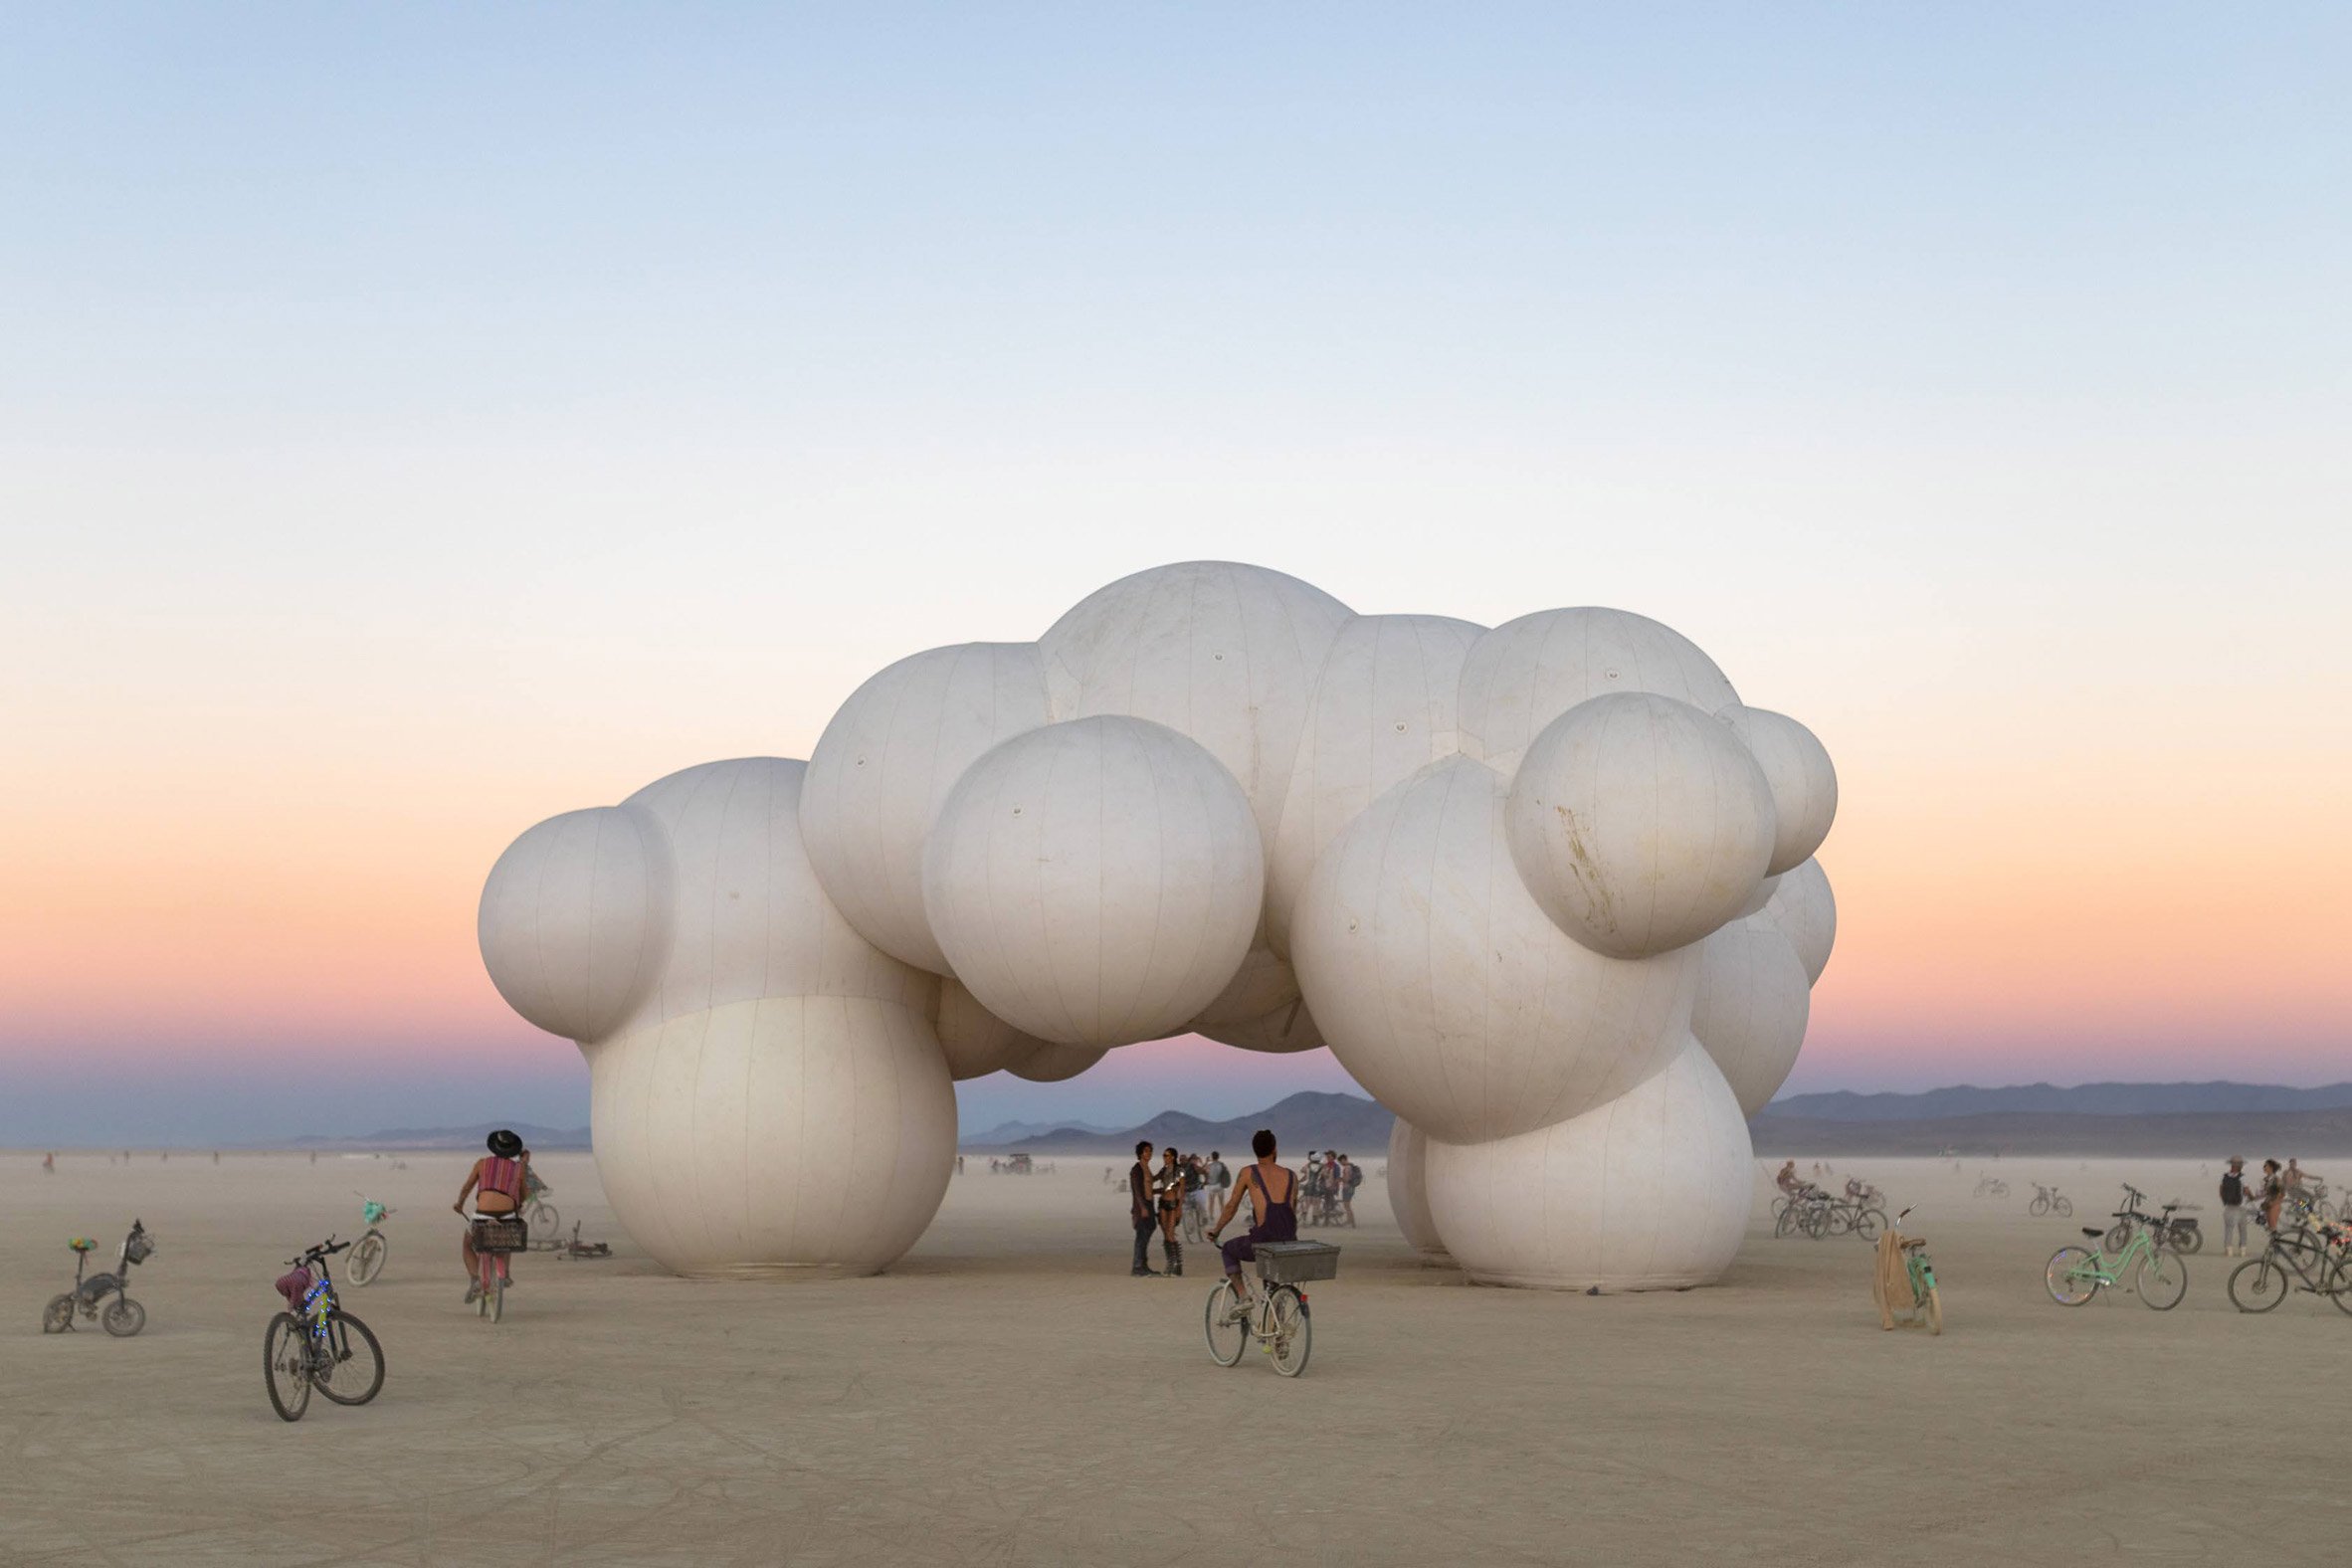 Eleven Burning Man 2022 installations that showcase deepdesert design